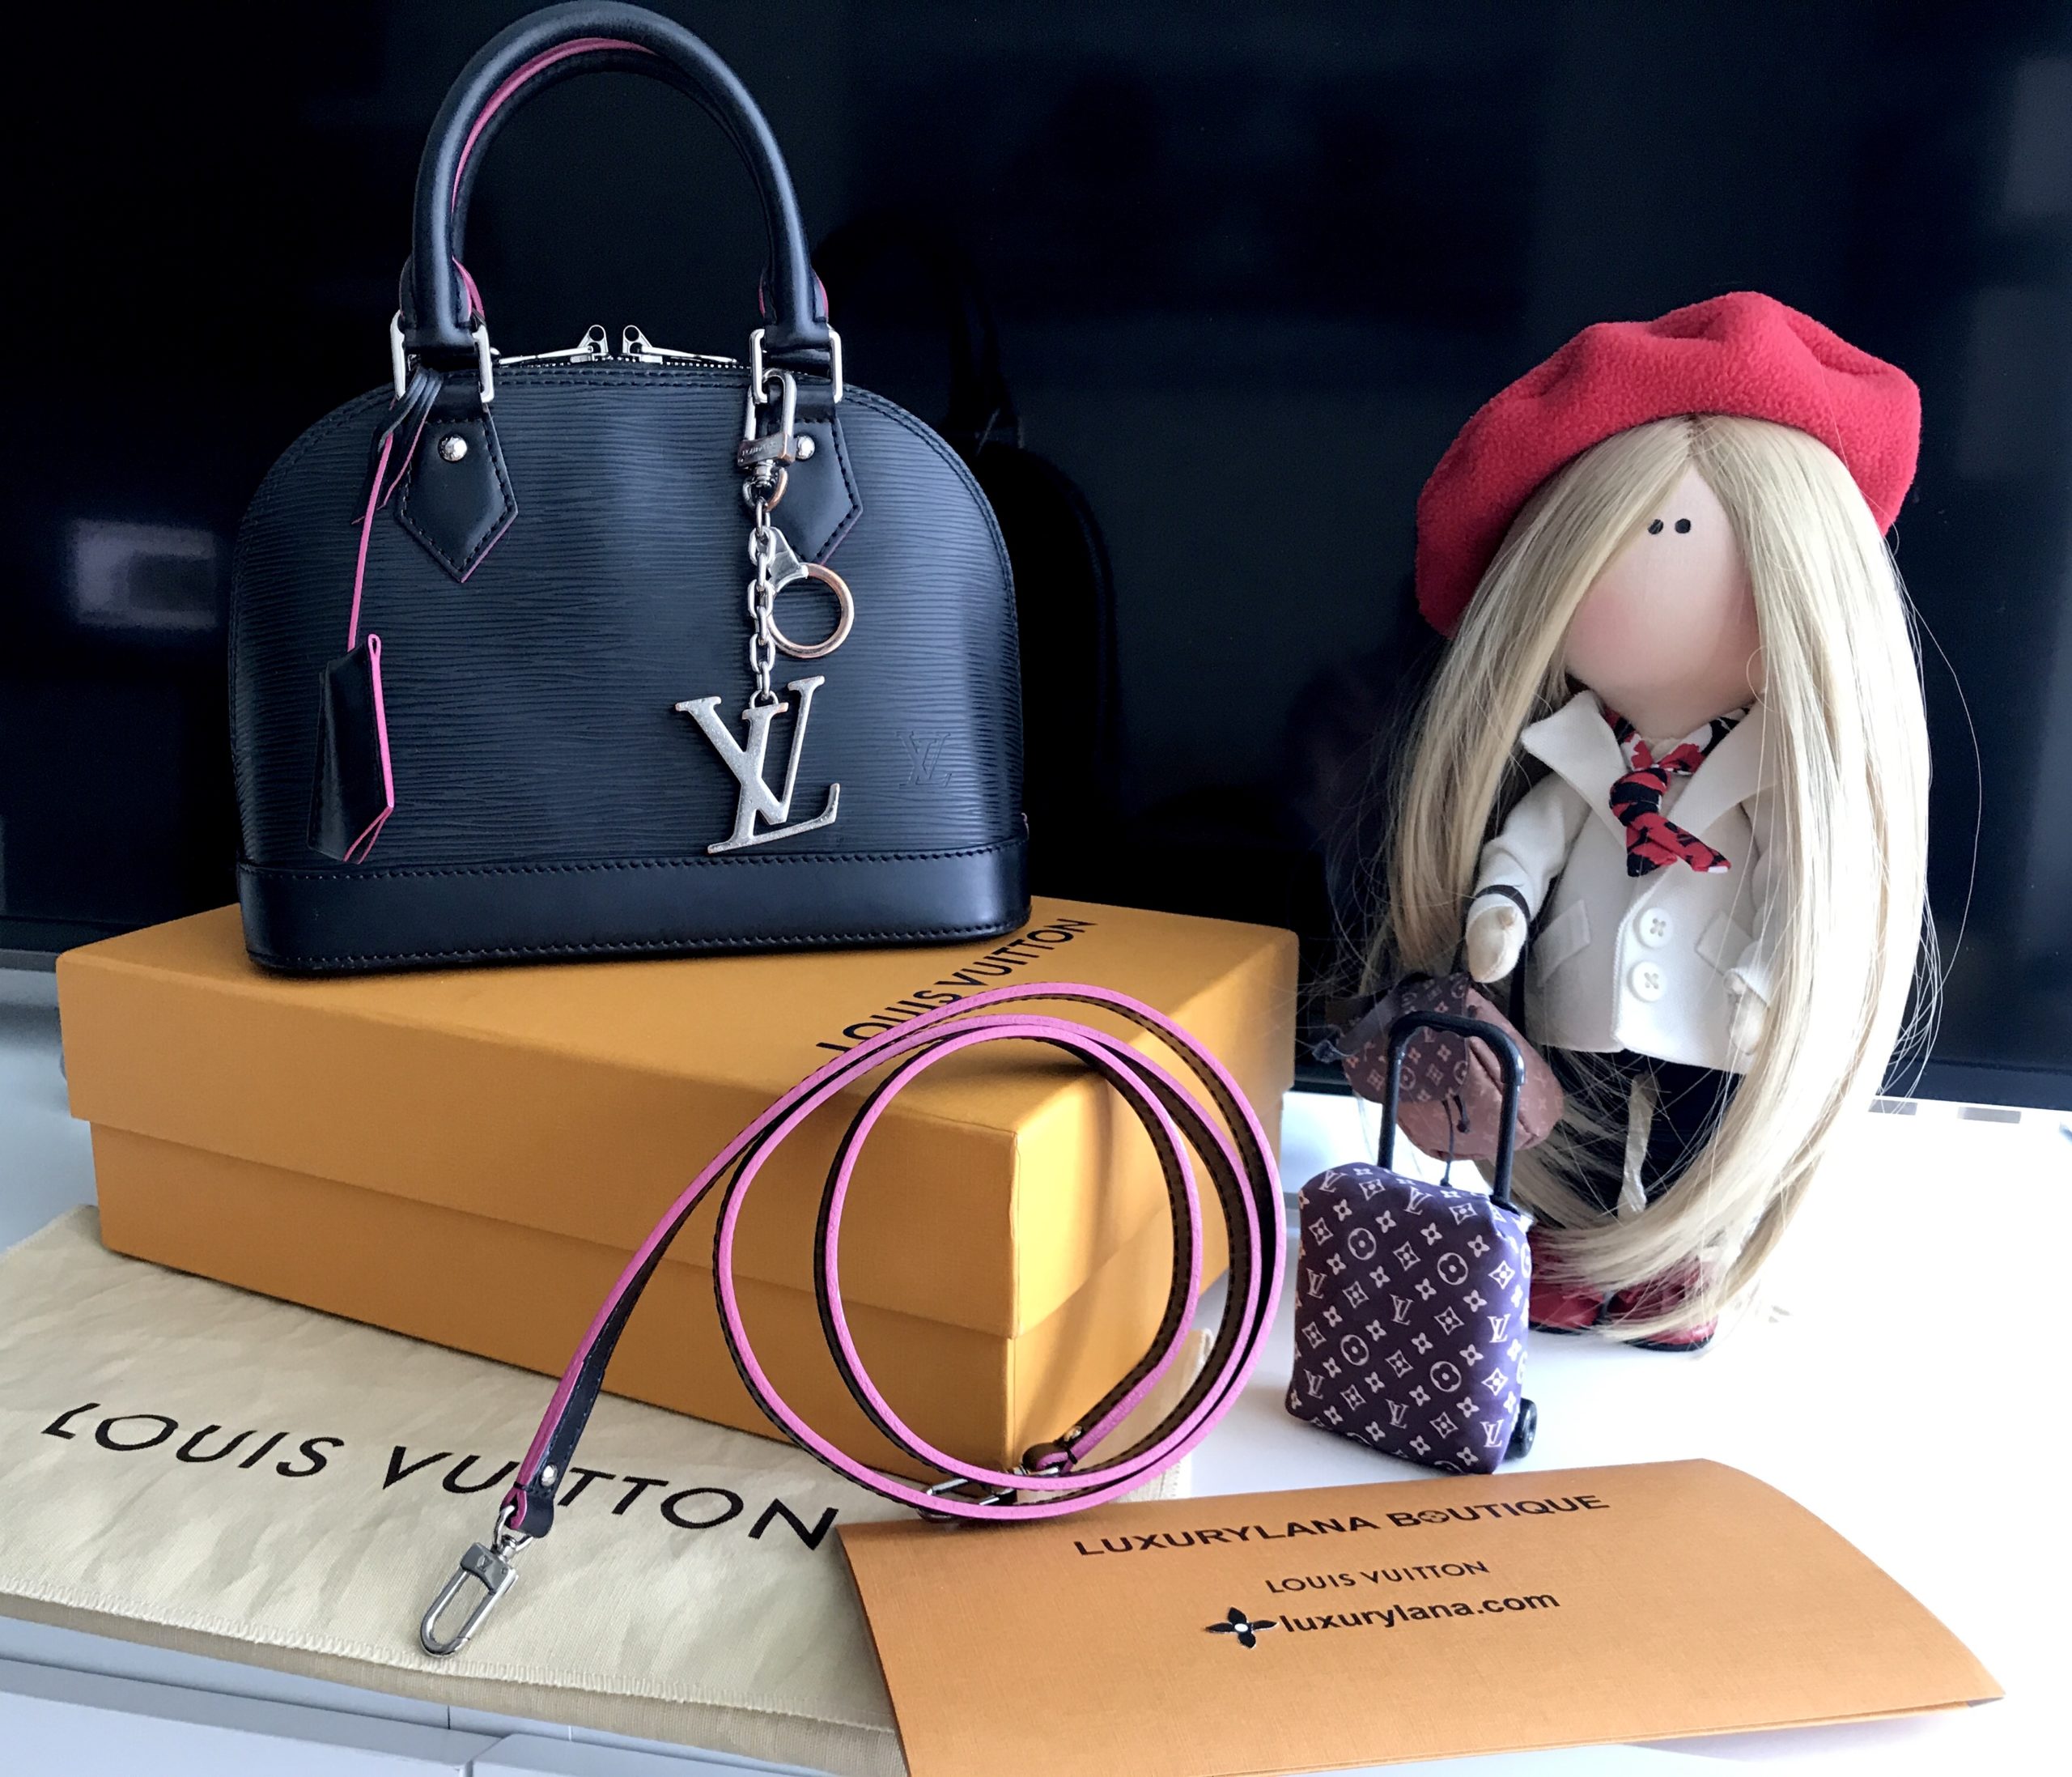 Louis Vuitton Alma BB Top Handle Bag in Epi Leather Warm | 3D model